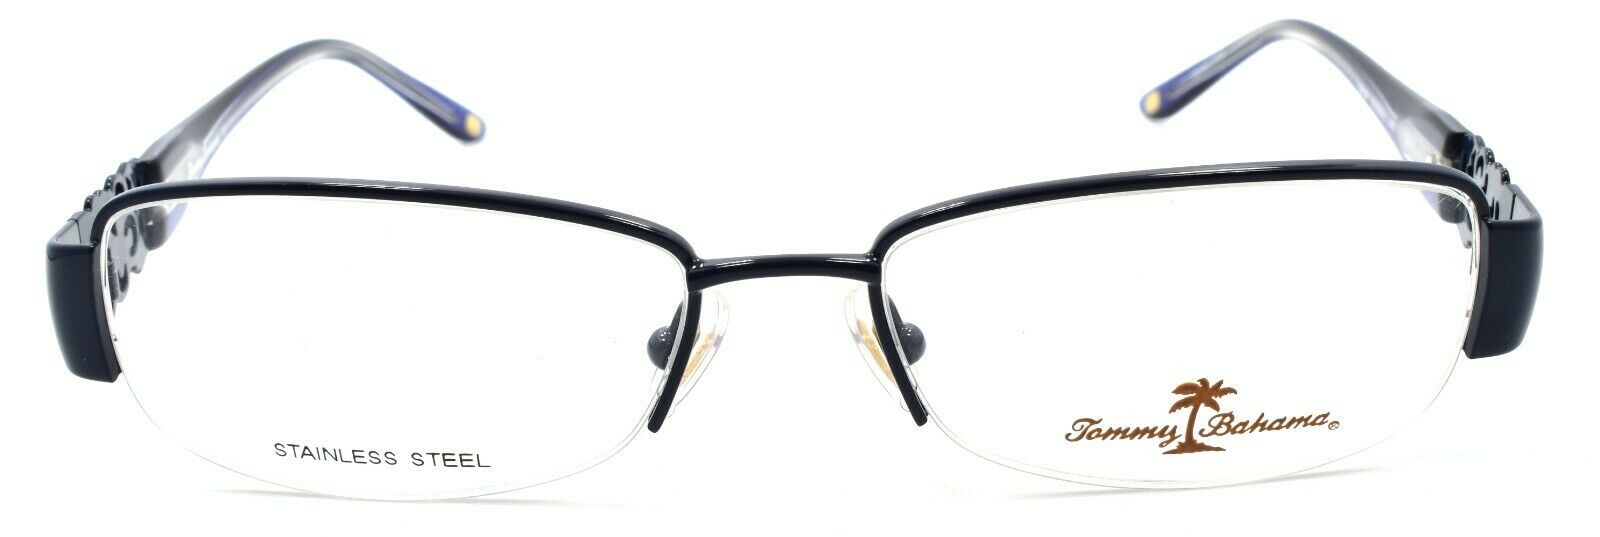 2-Tommy Bahama TB5026 414 Women's Eyeglasses Frames Half-rim 52-16-140 Navy Blue-788678023438-IKSpecs